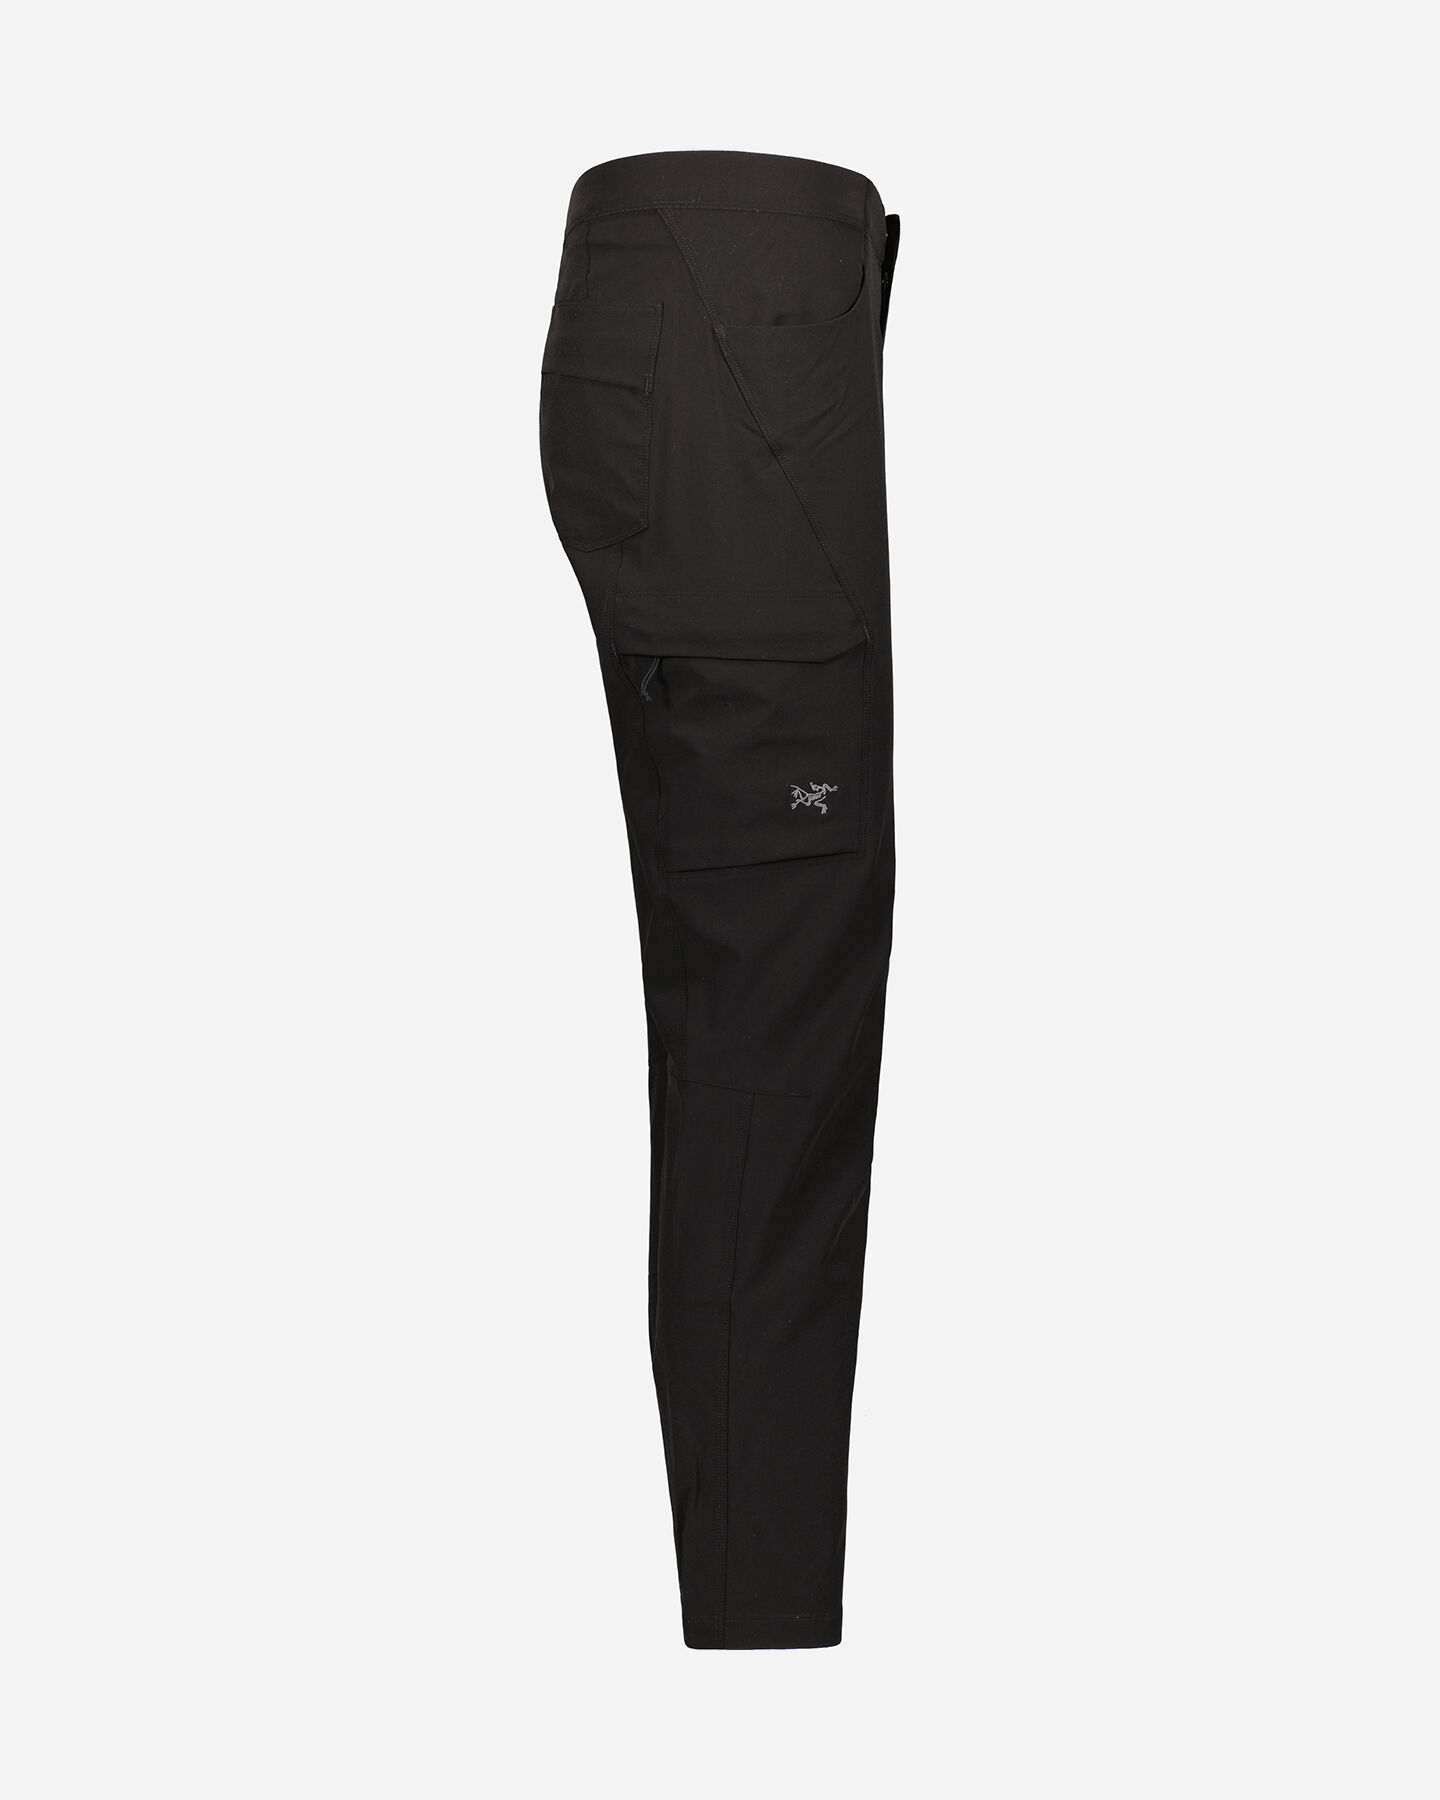  Pantalone outdoor ARC'TERYX ALROY W S4105515|1|4 scatto 1